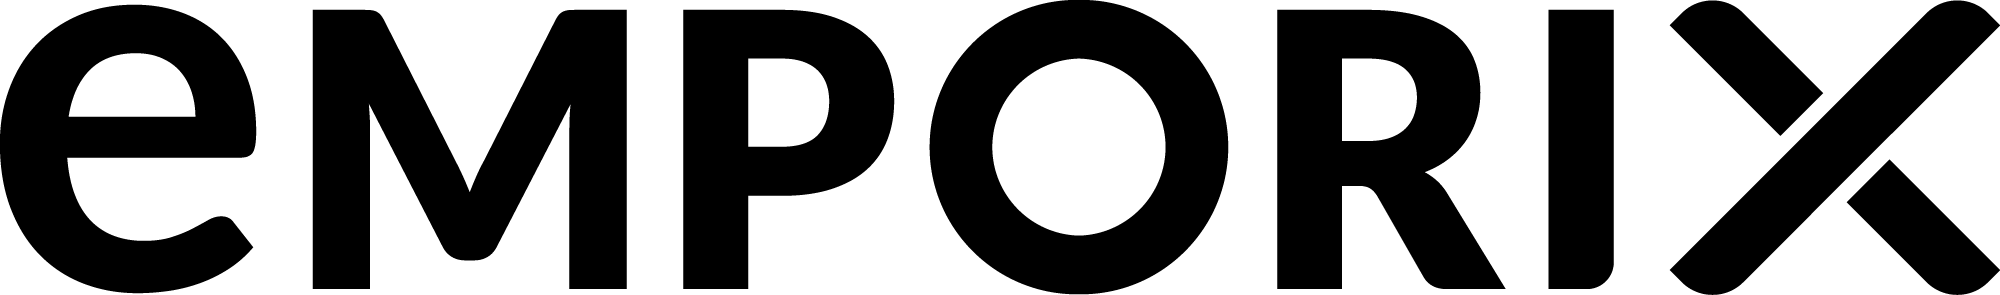 Emporix_Logo_Black